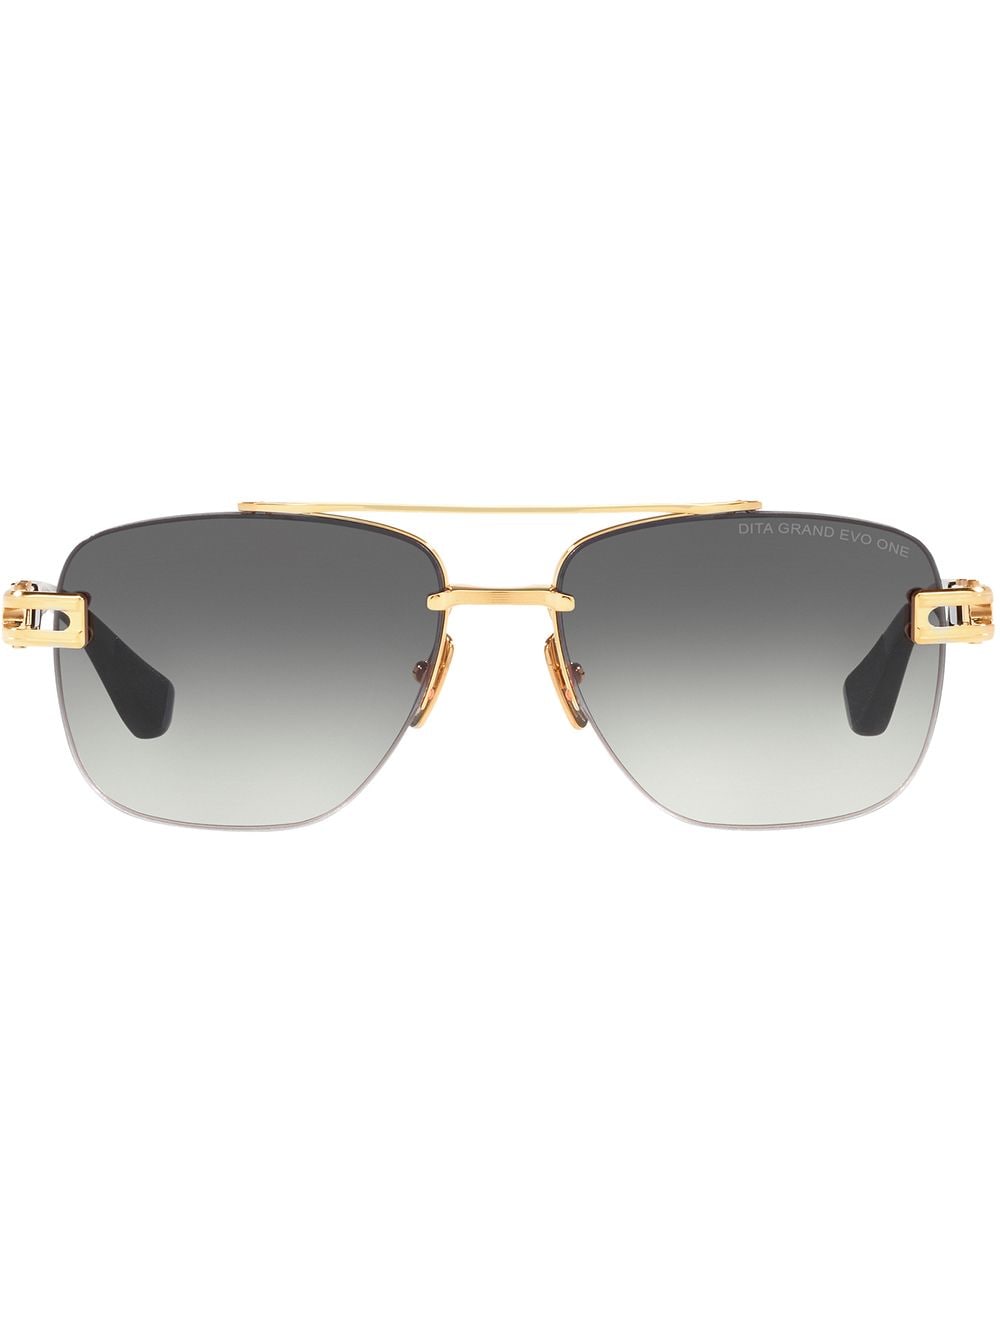 Dita Eyewear Grand-Evo One sunglasses